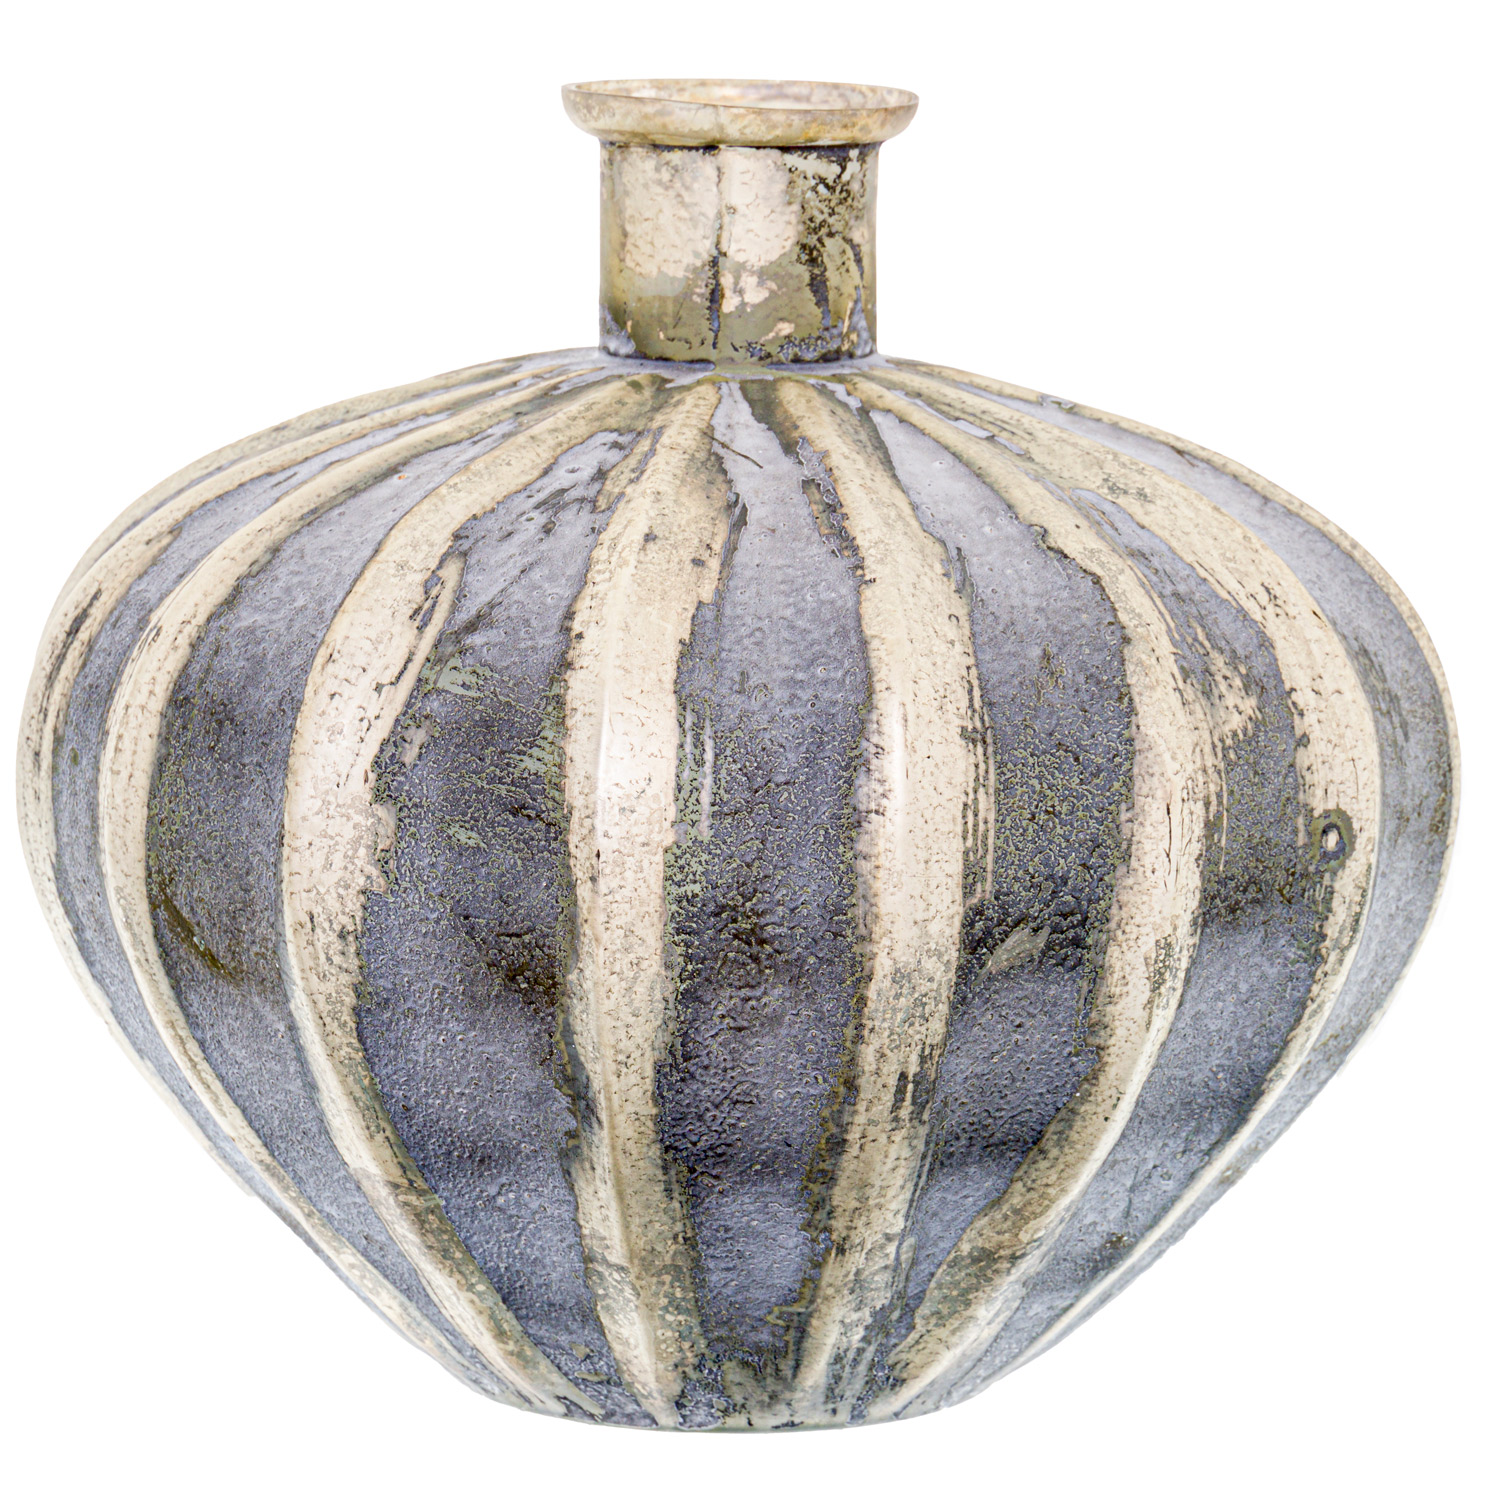 Burnished And Grey Striped Squat Vase - Image 1